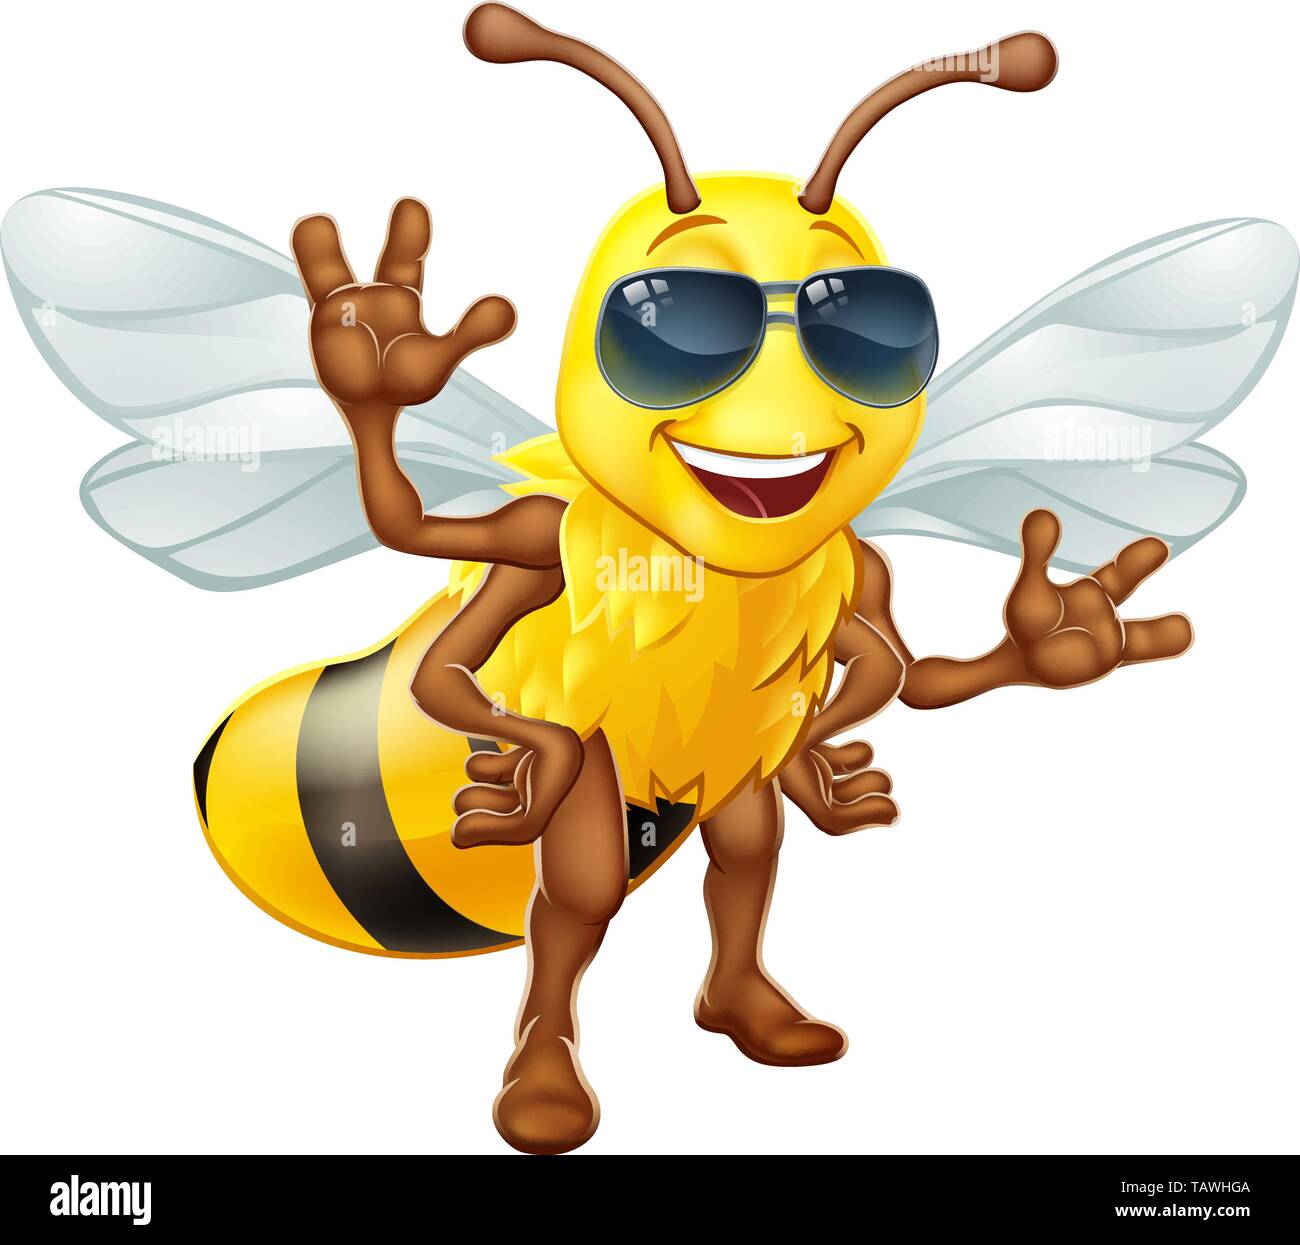 Cool Honey Bumble Bee in Sunglasses Cartoon Stock Vector